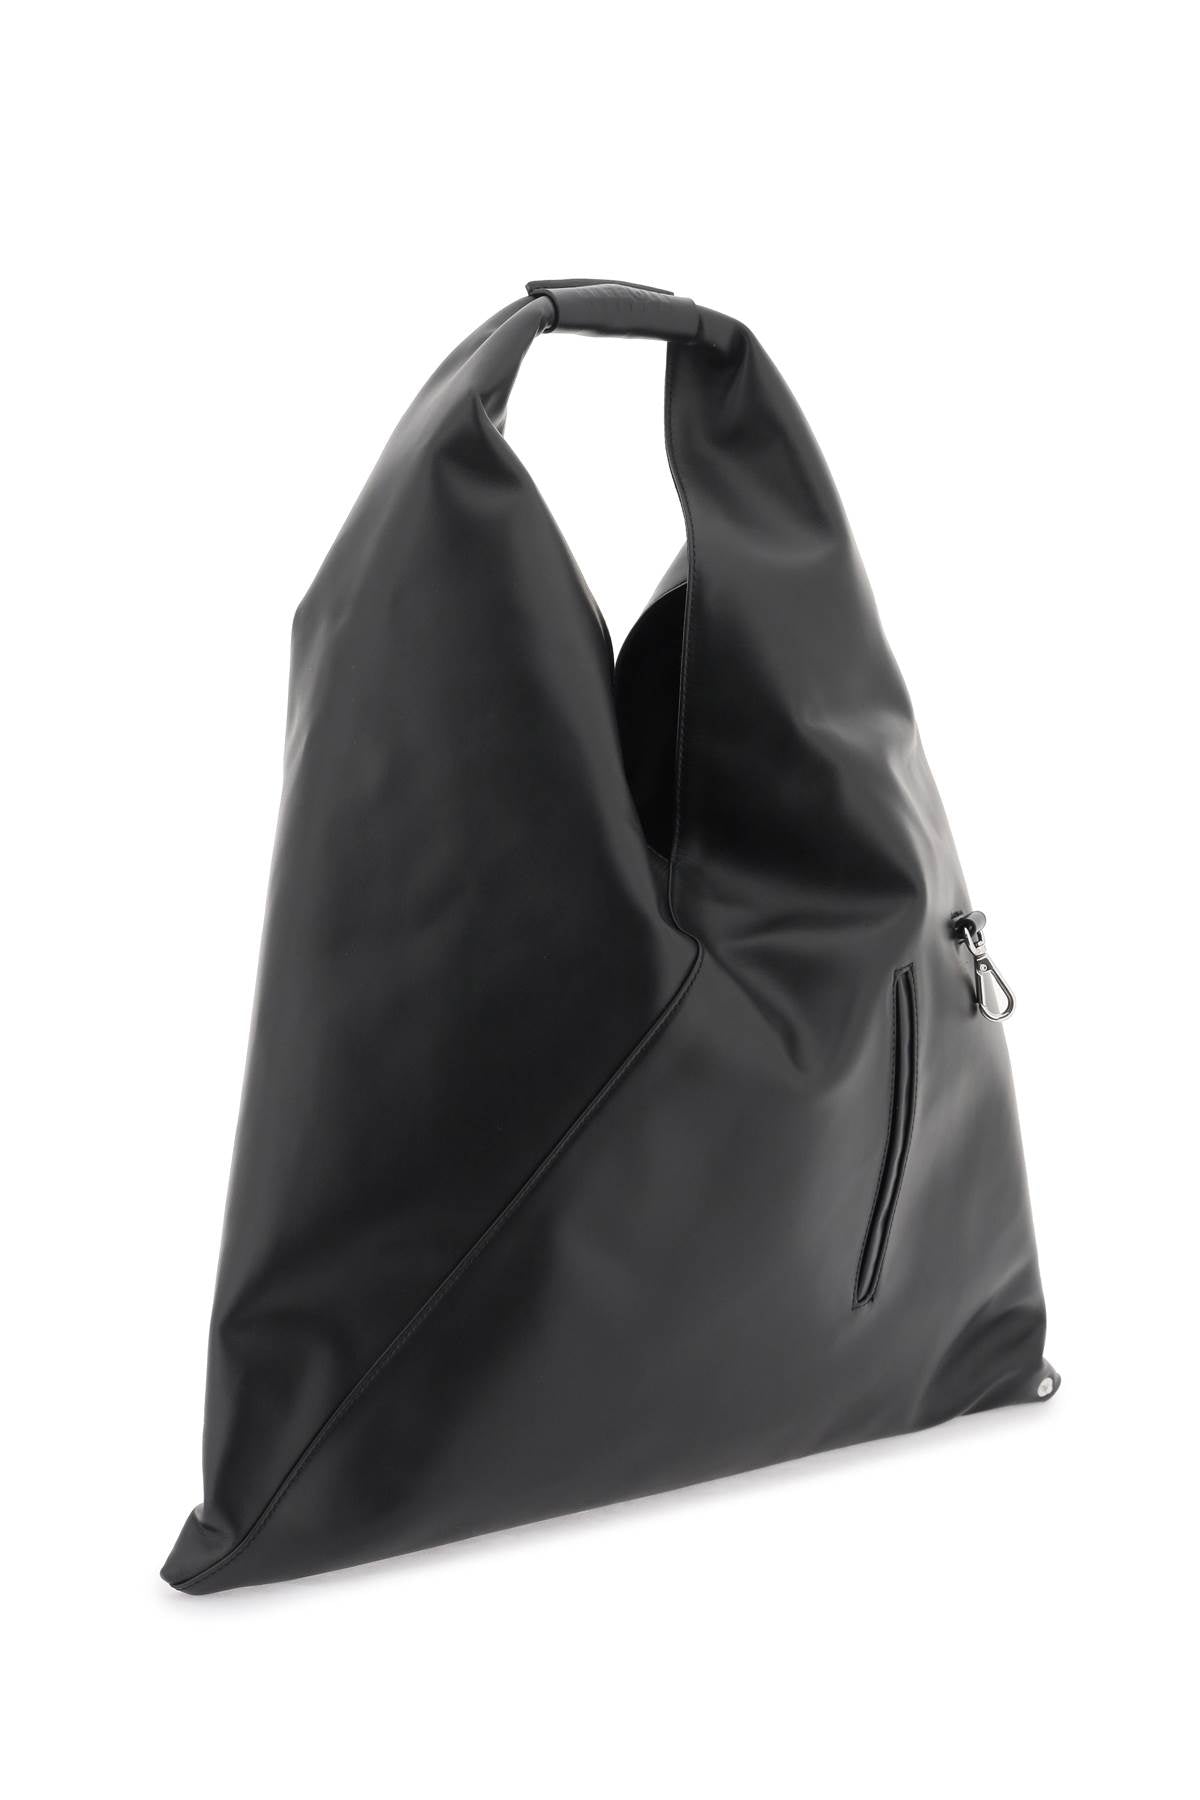 MM6 MAISON MARGIELA Japanese Faux Leather Handbag with Signature Design and Convertible Shape